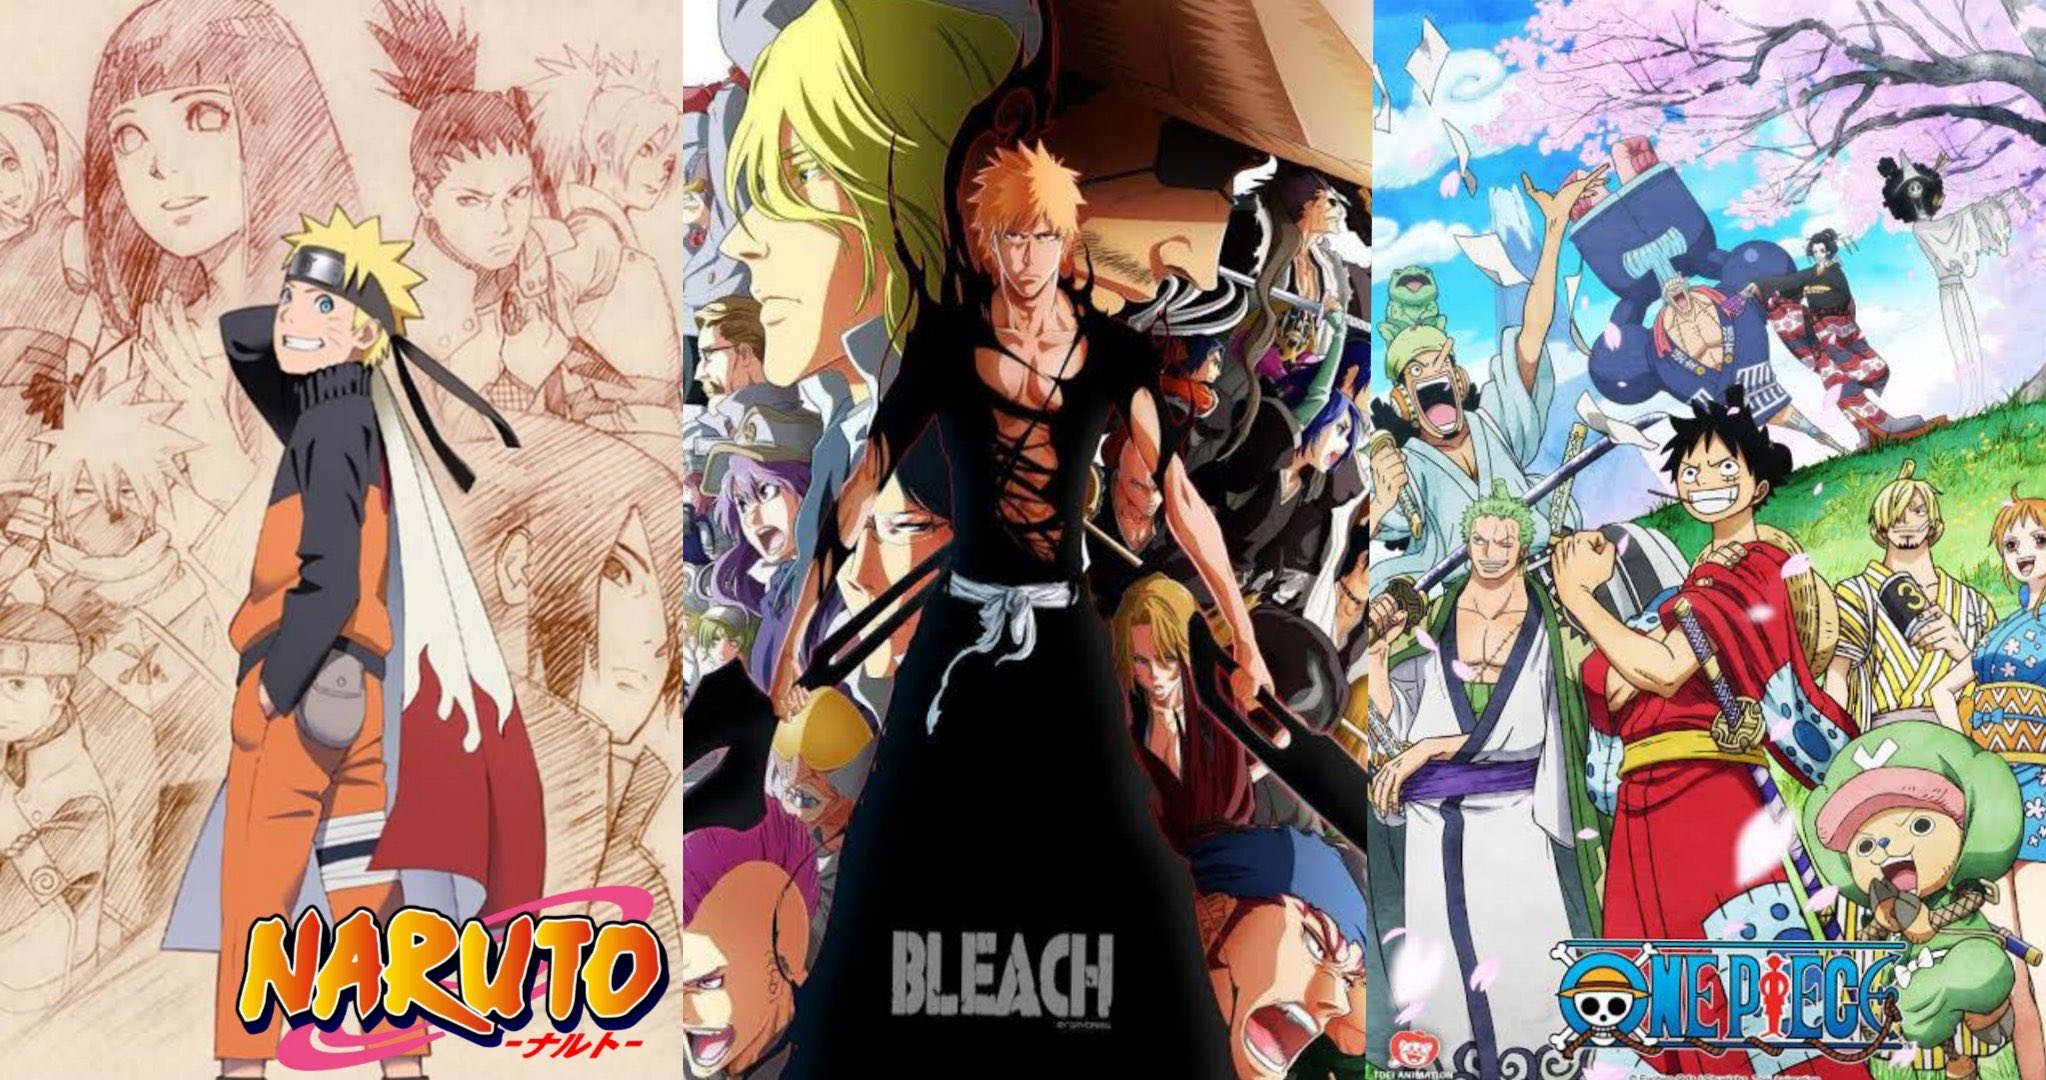 Ichigo Vs Naruto Bleach Vs Naruto by Azal2712 on DeviantArt